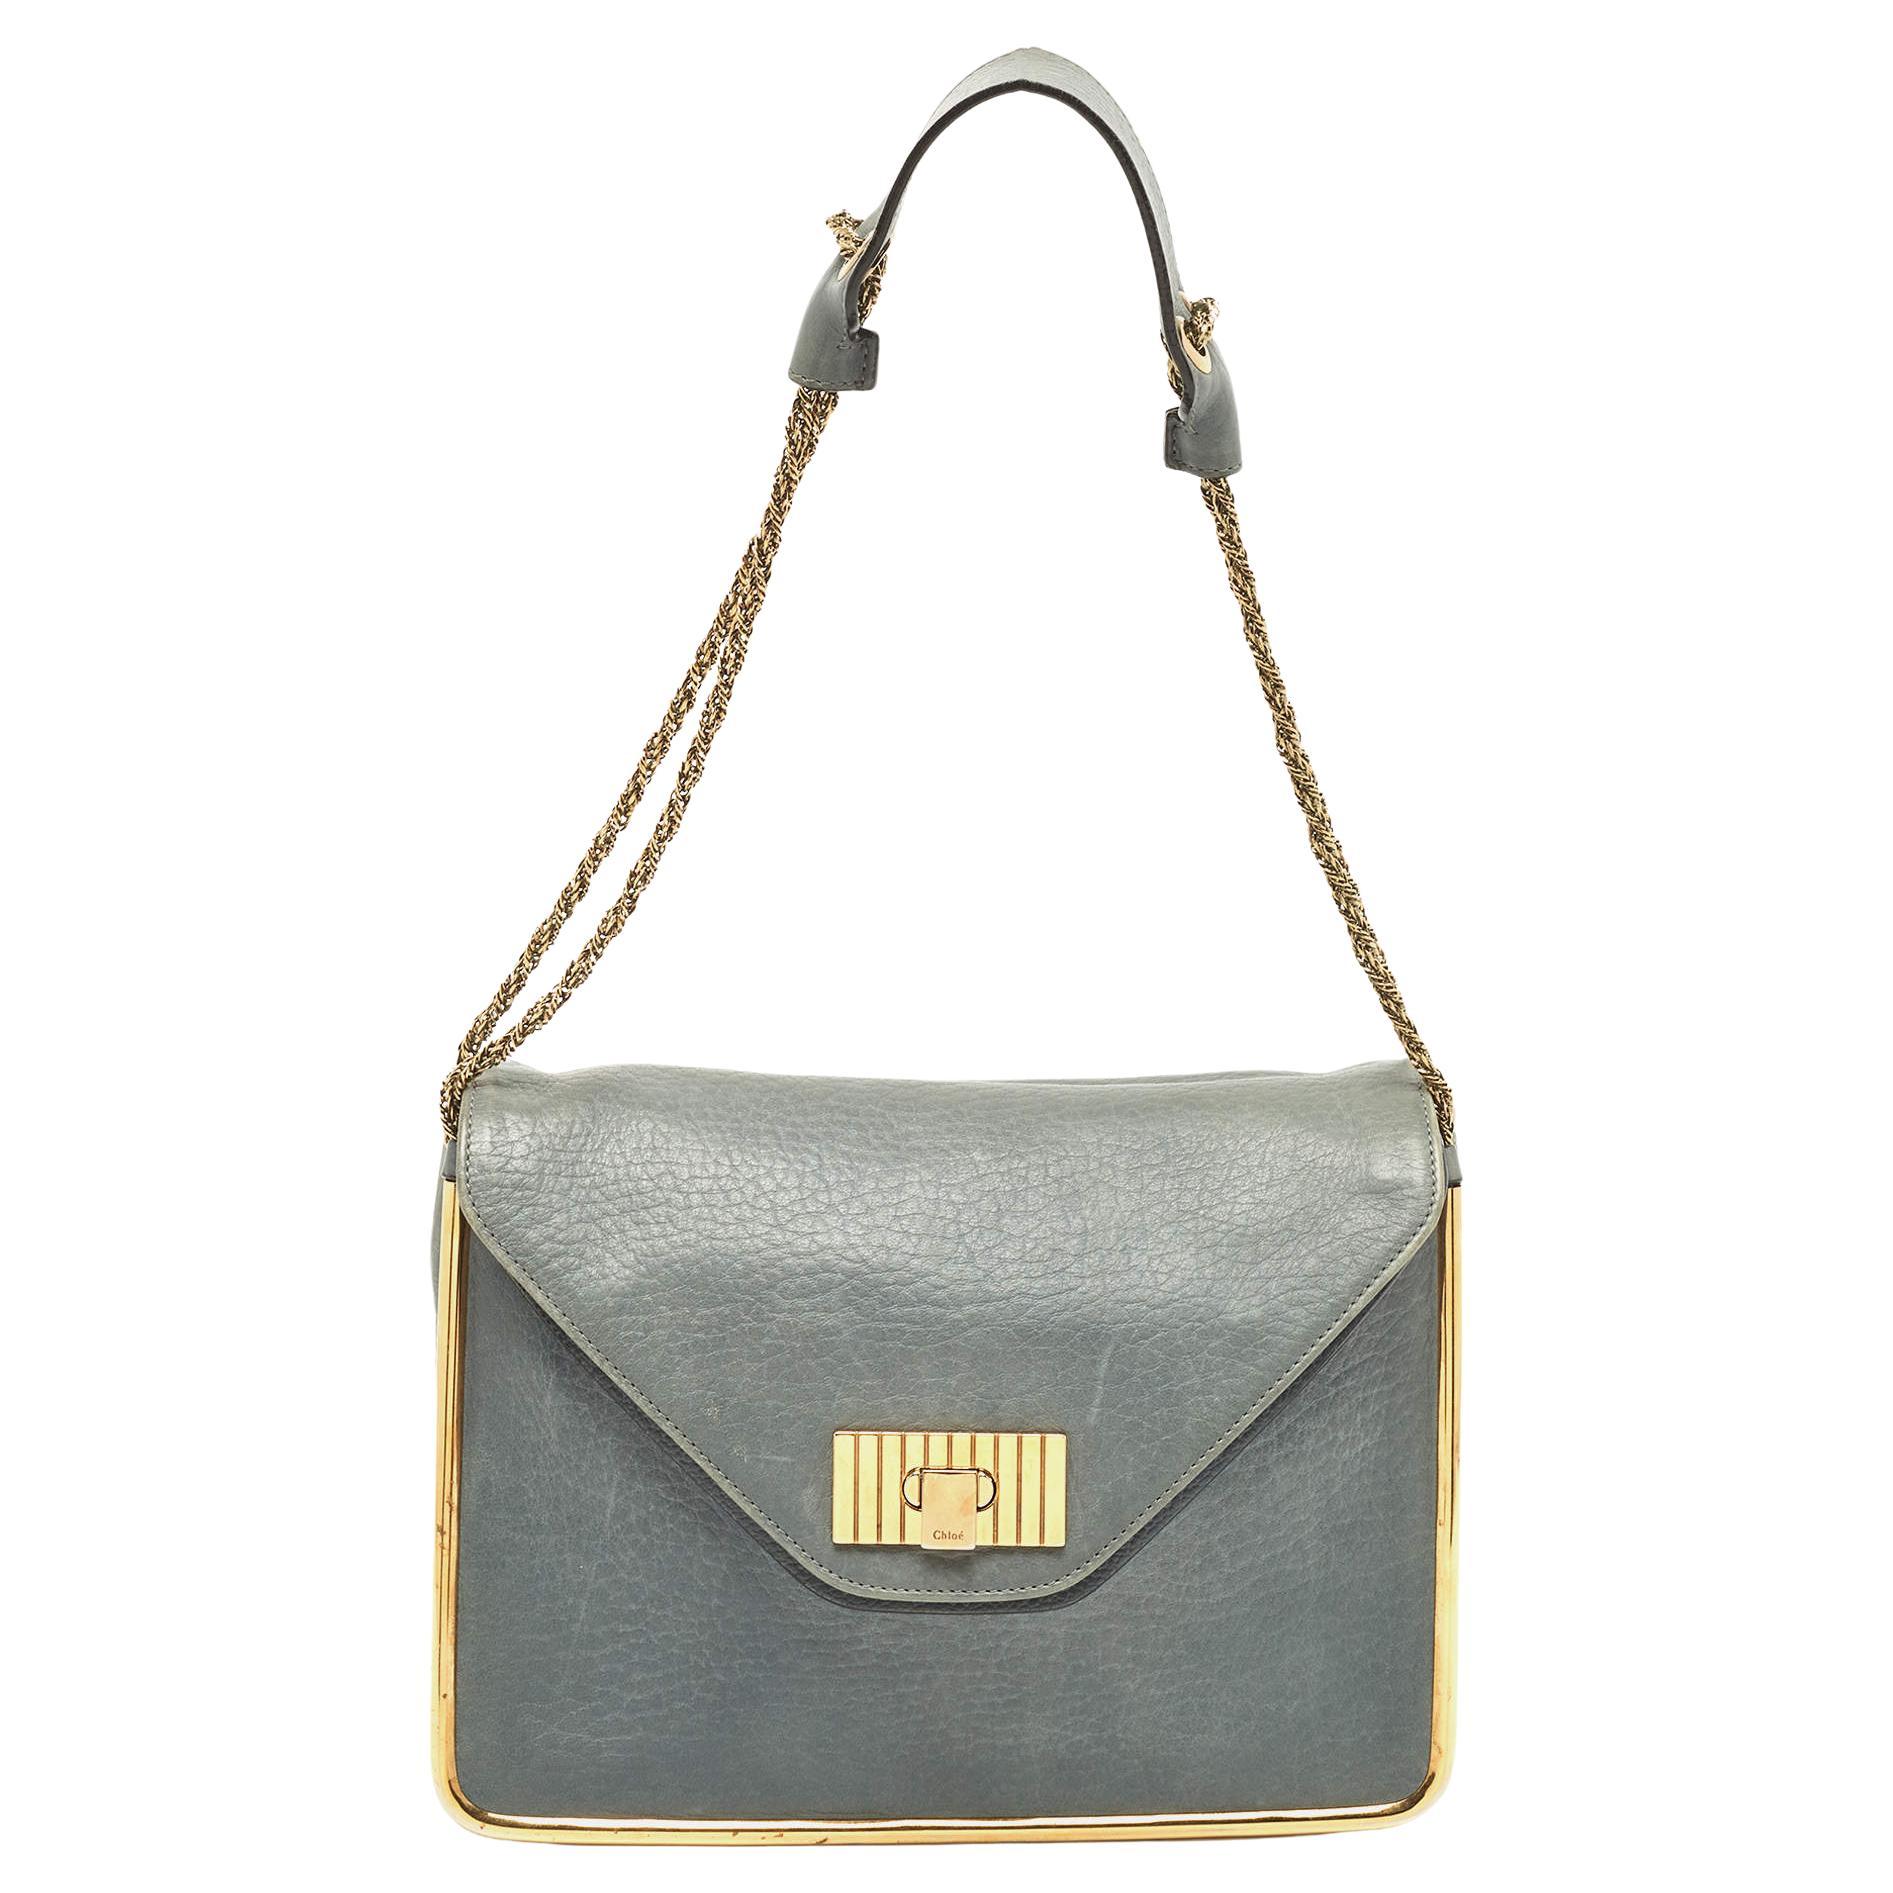 Chloe Dusky Leather Medium Sally Shoulder Bag